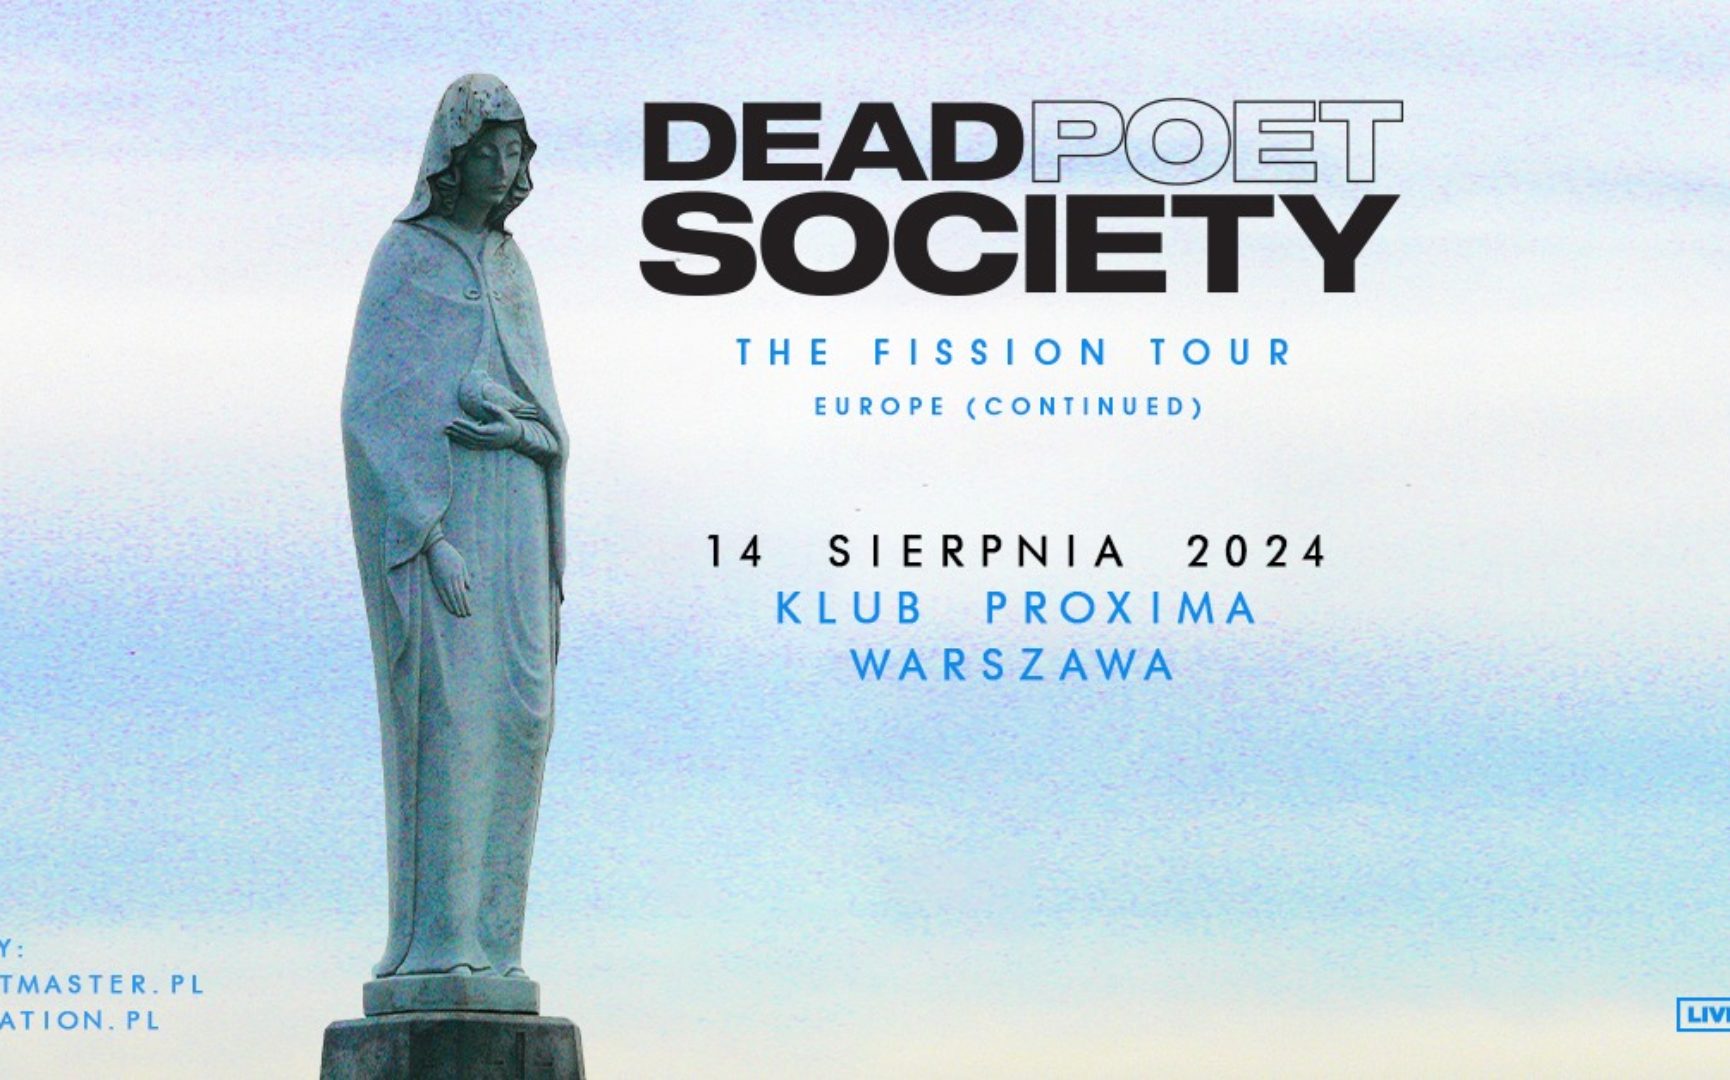 Dead Poet Society